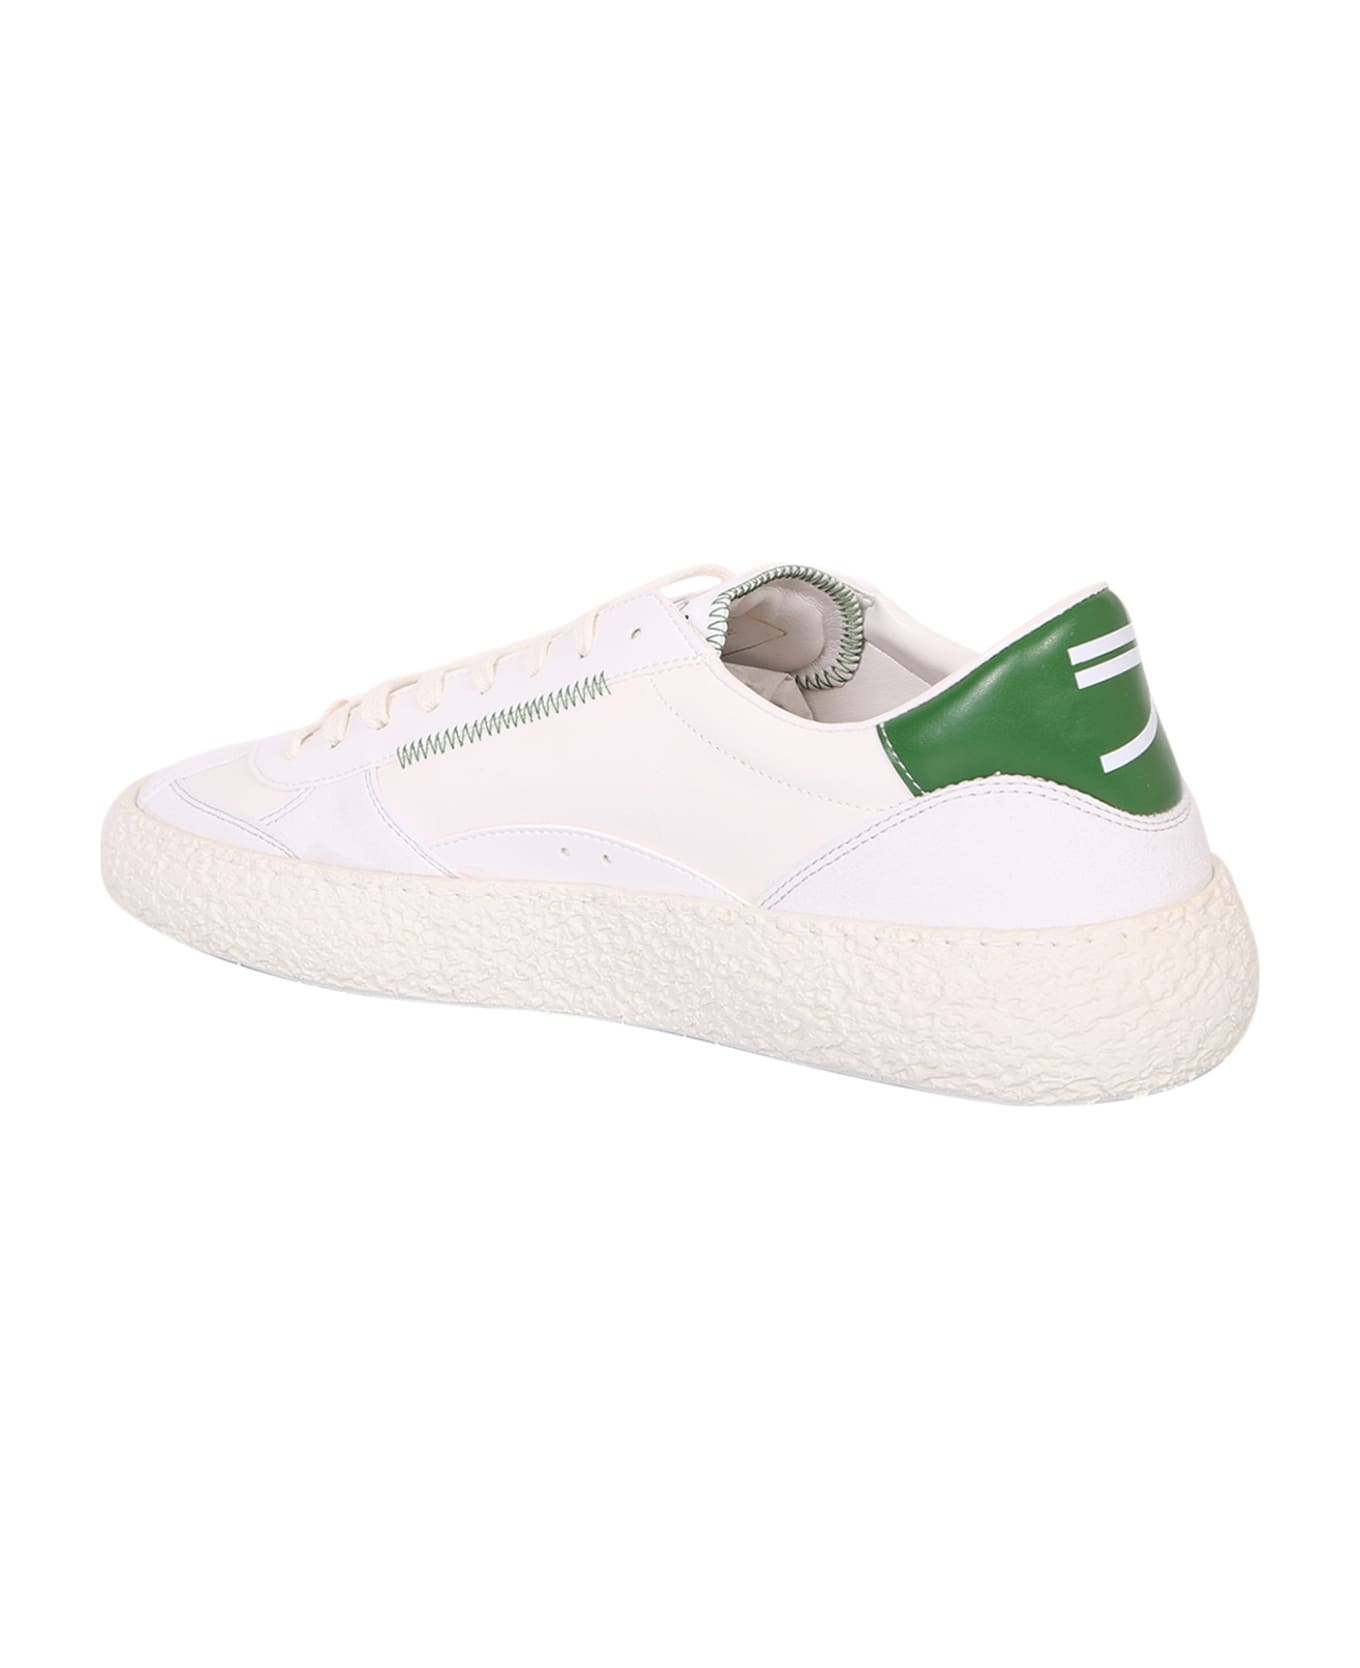 Puraai Erba Low-top Sneakers - White